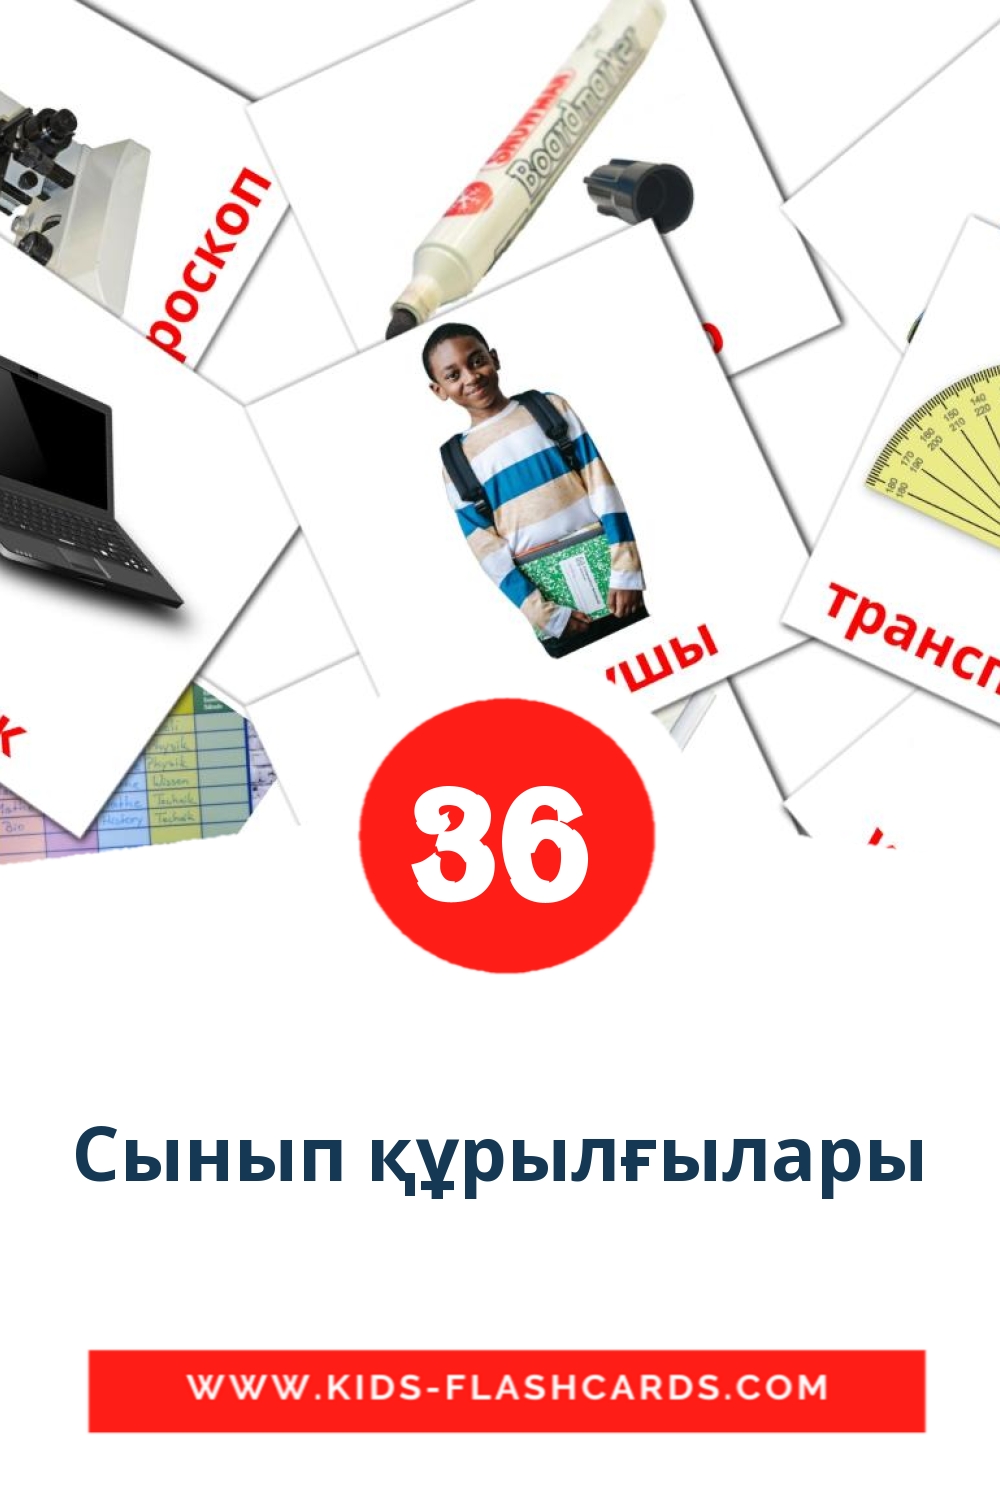 Сынып құрылғылары на казахском для Детского Сада (36 карточек)